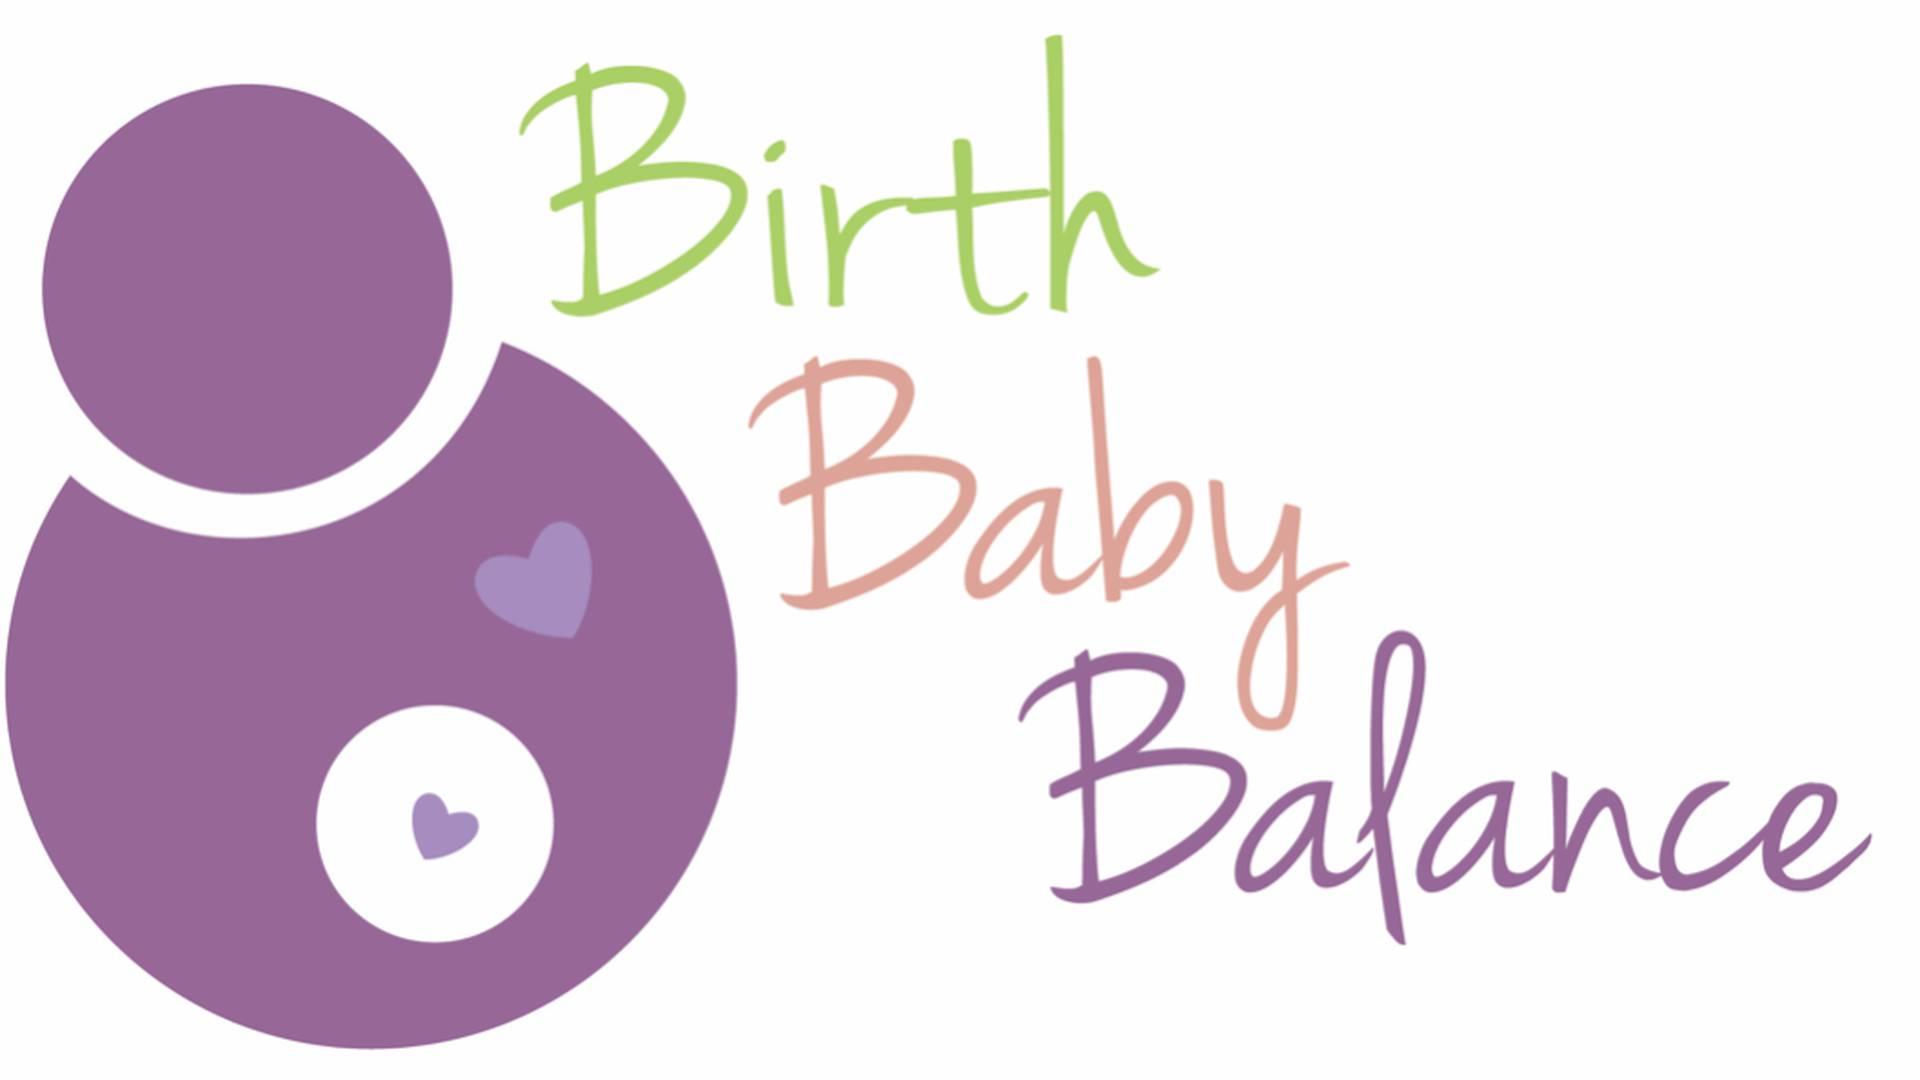 Birth Baby Balance photo